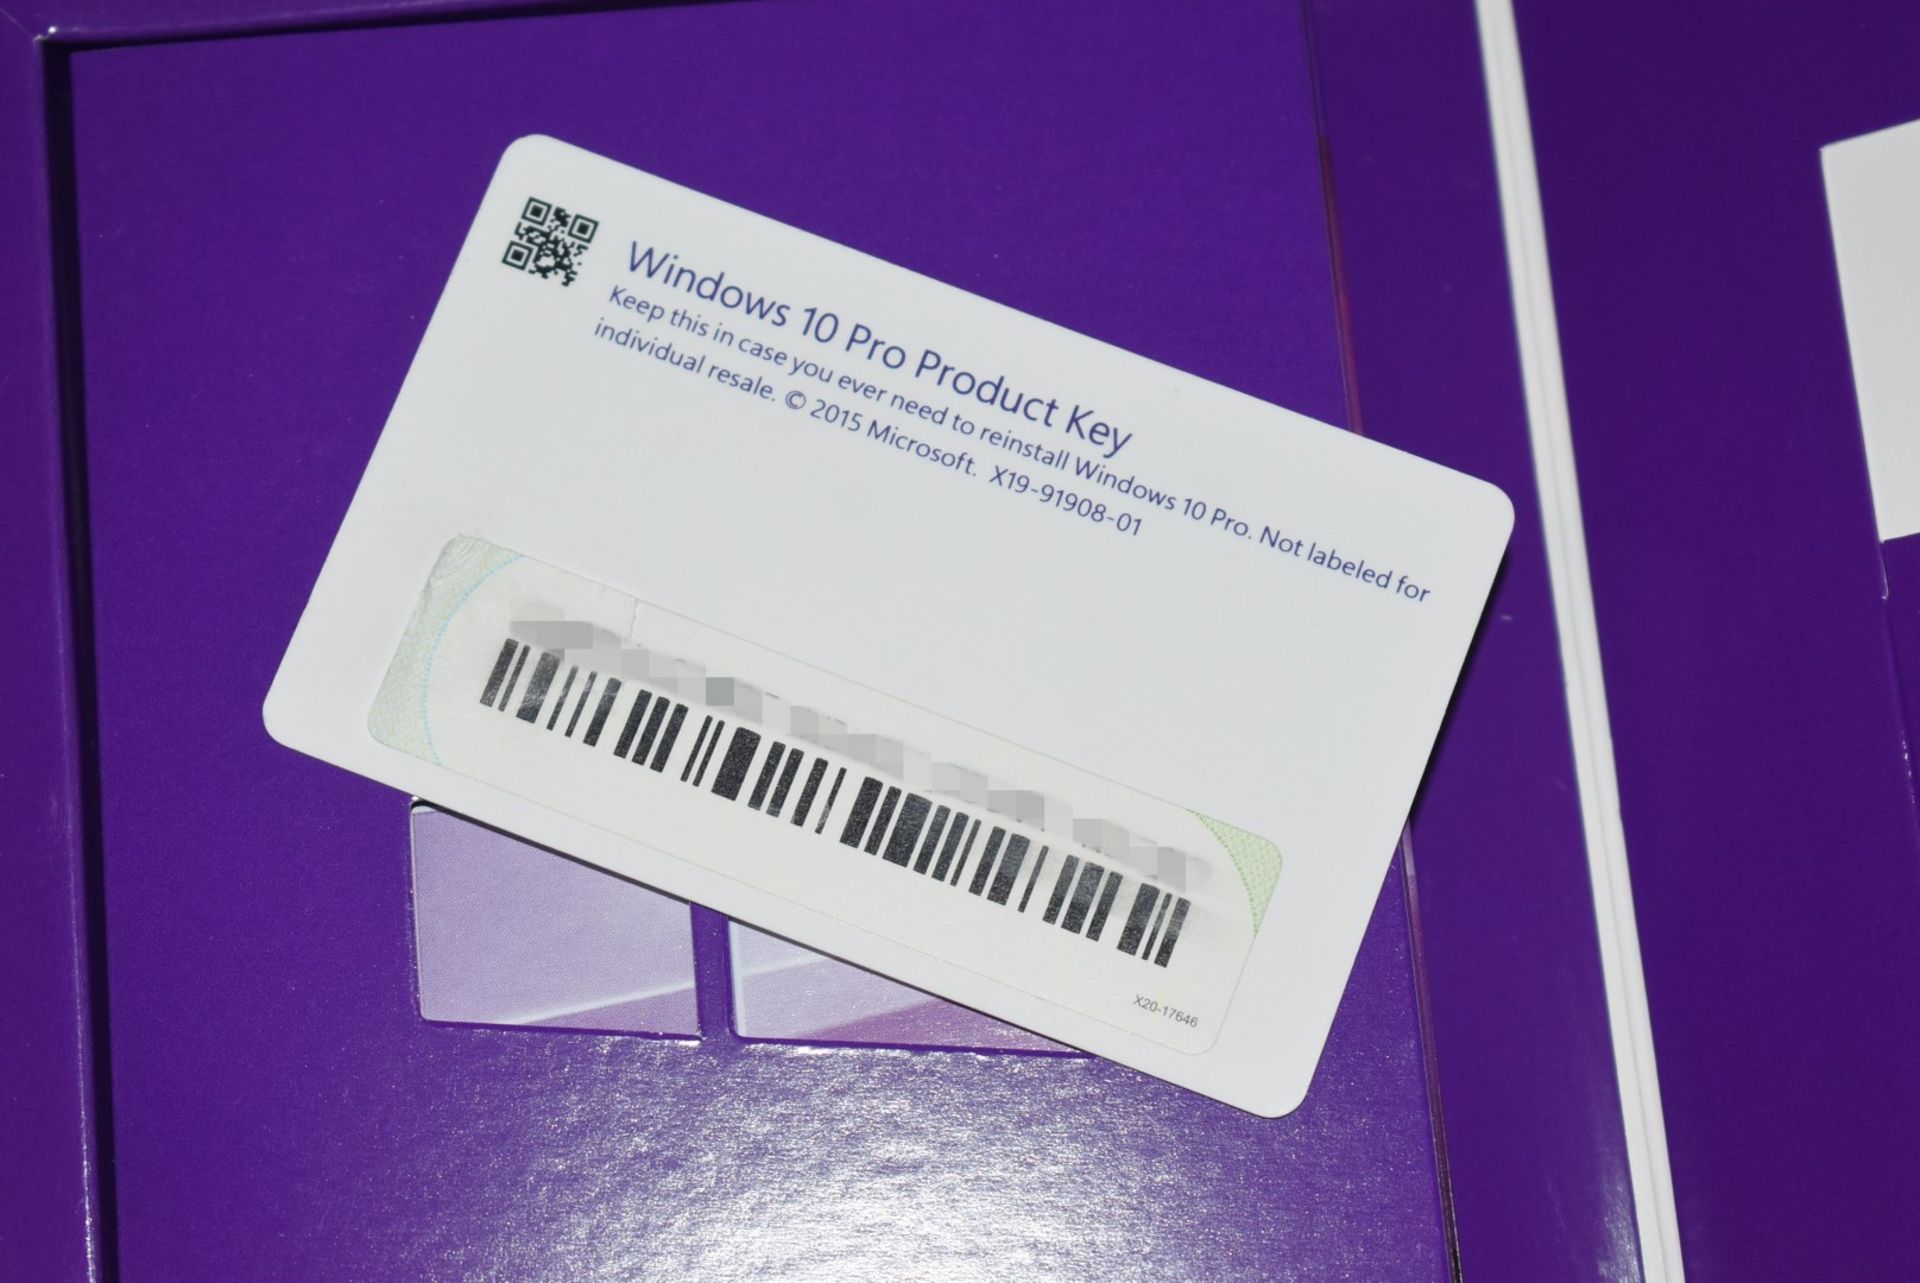 1 x Microsoft Windows 10 Pro Activation Key Card With Original Box - Ref: MPC204 P1 - CL678 - - Image 4 of 4